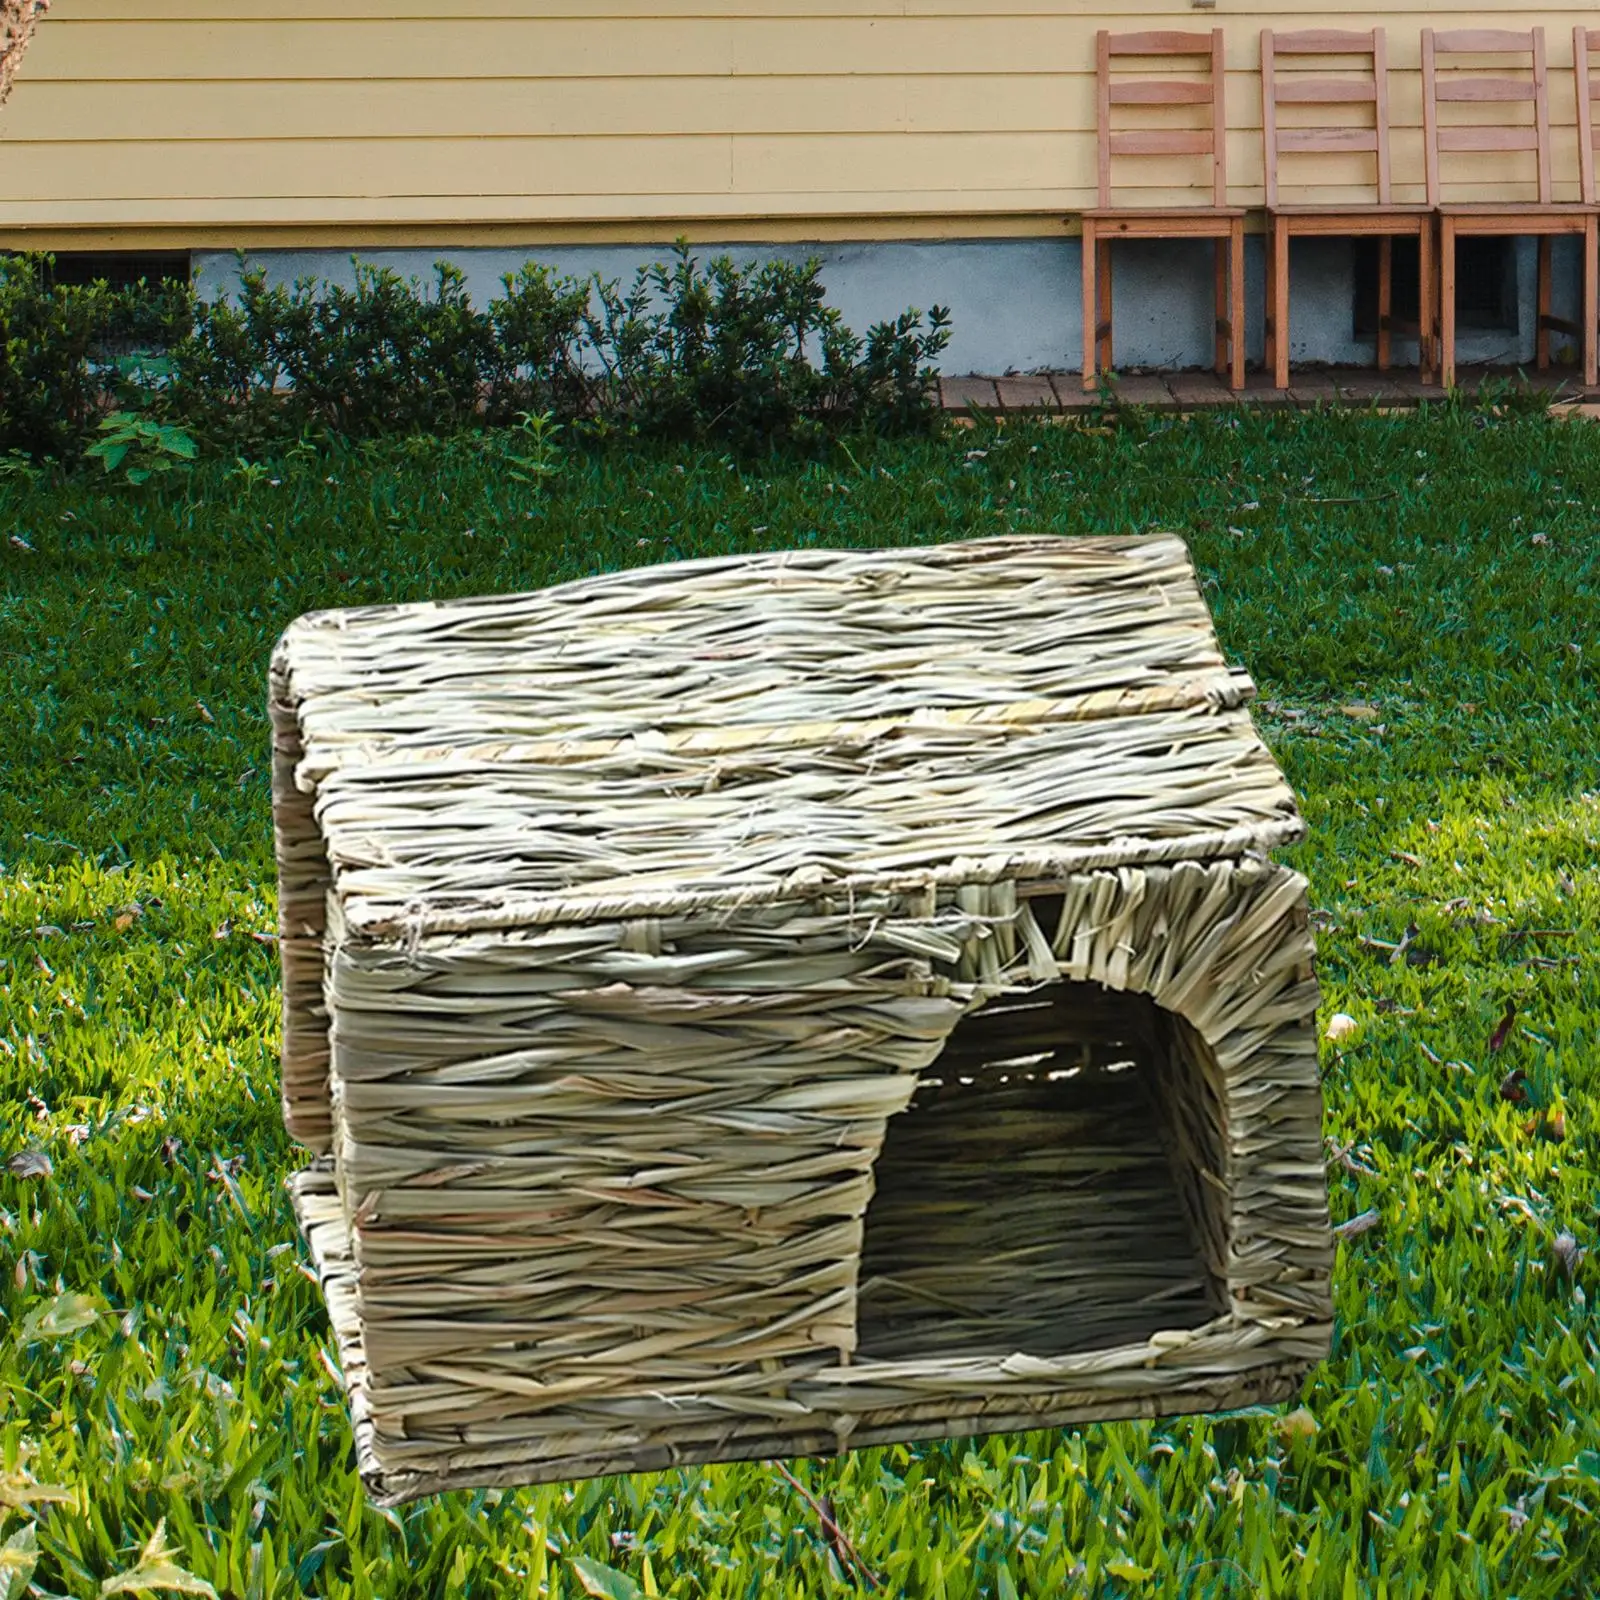 Bird Cage, Natural Straw Birdhouse, Resting Place for Birds, Handmade Birds Nest Straw Bird Shelter Cage